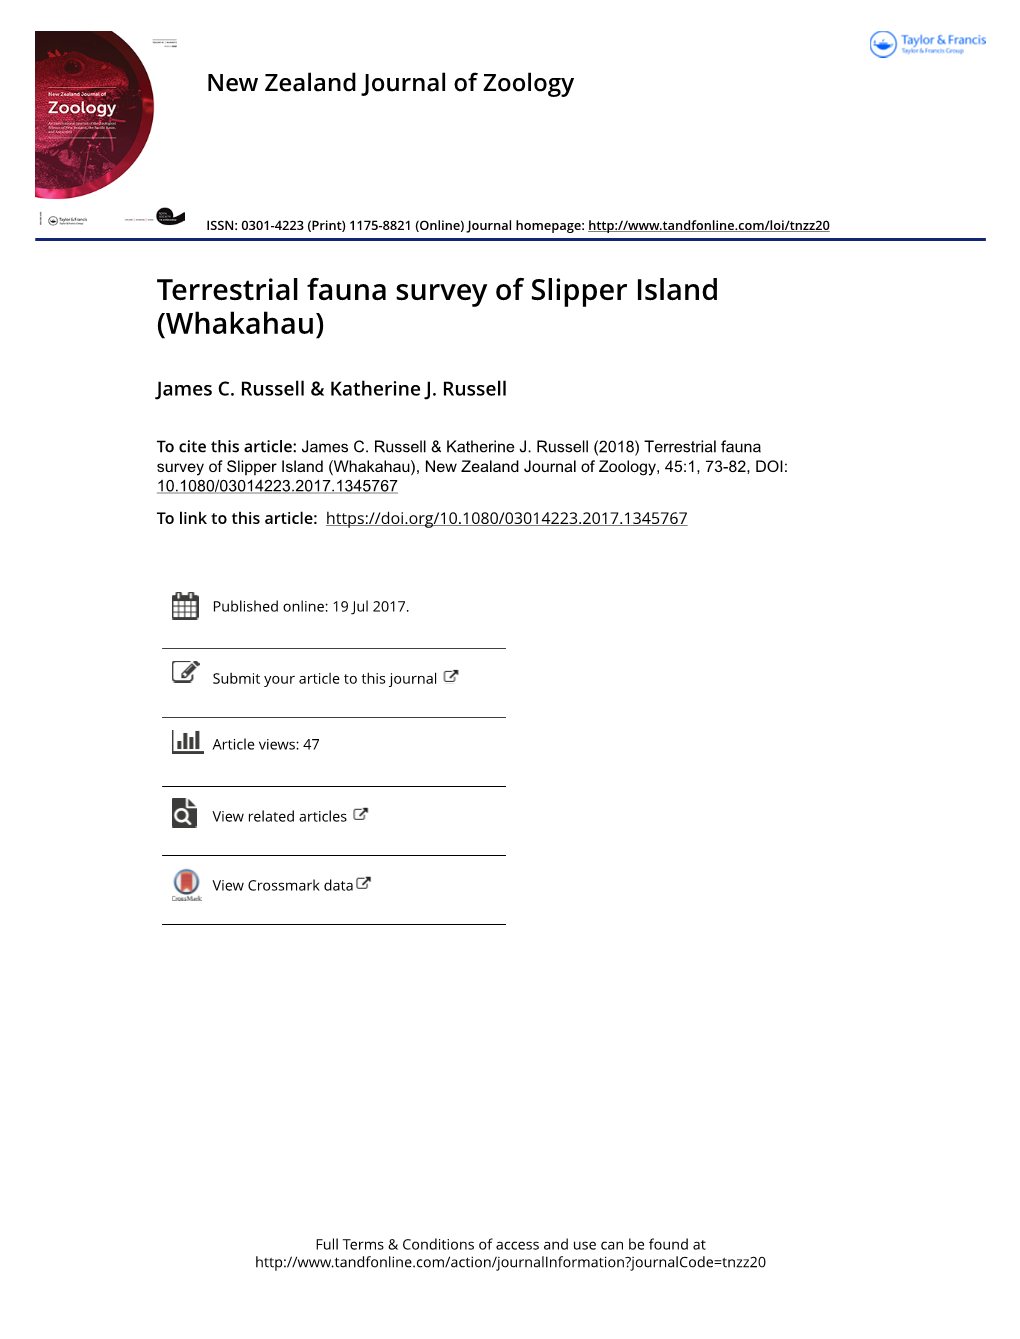 Terrestrial Fauna Survey of Slipper Island (Whakahau)